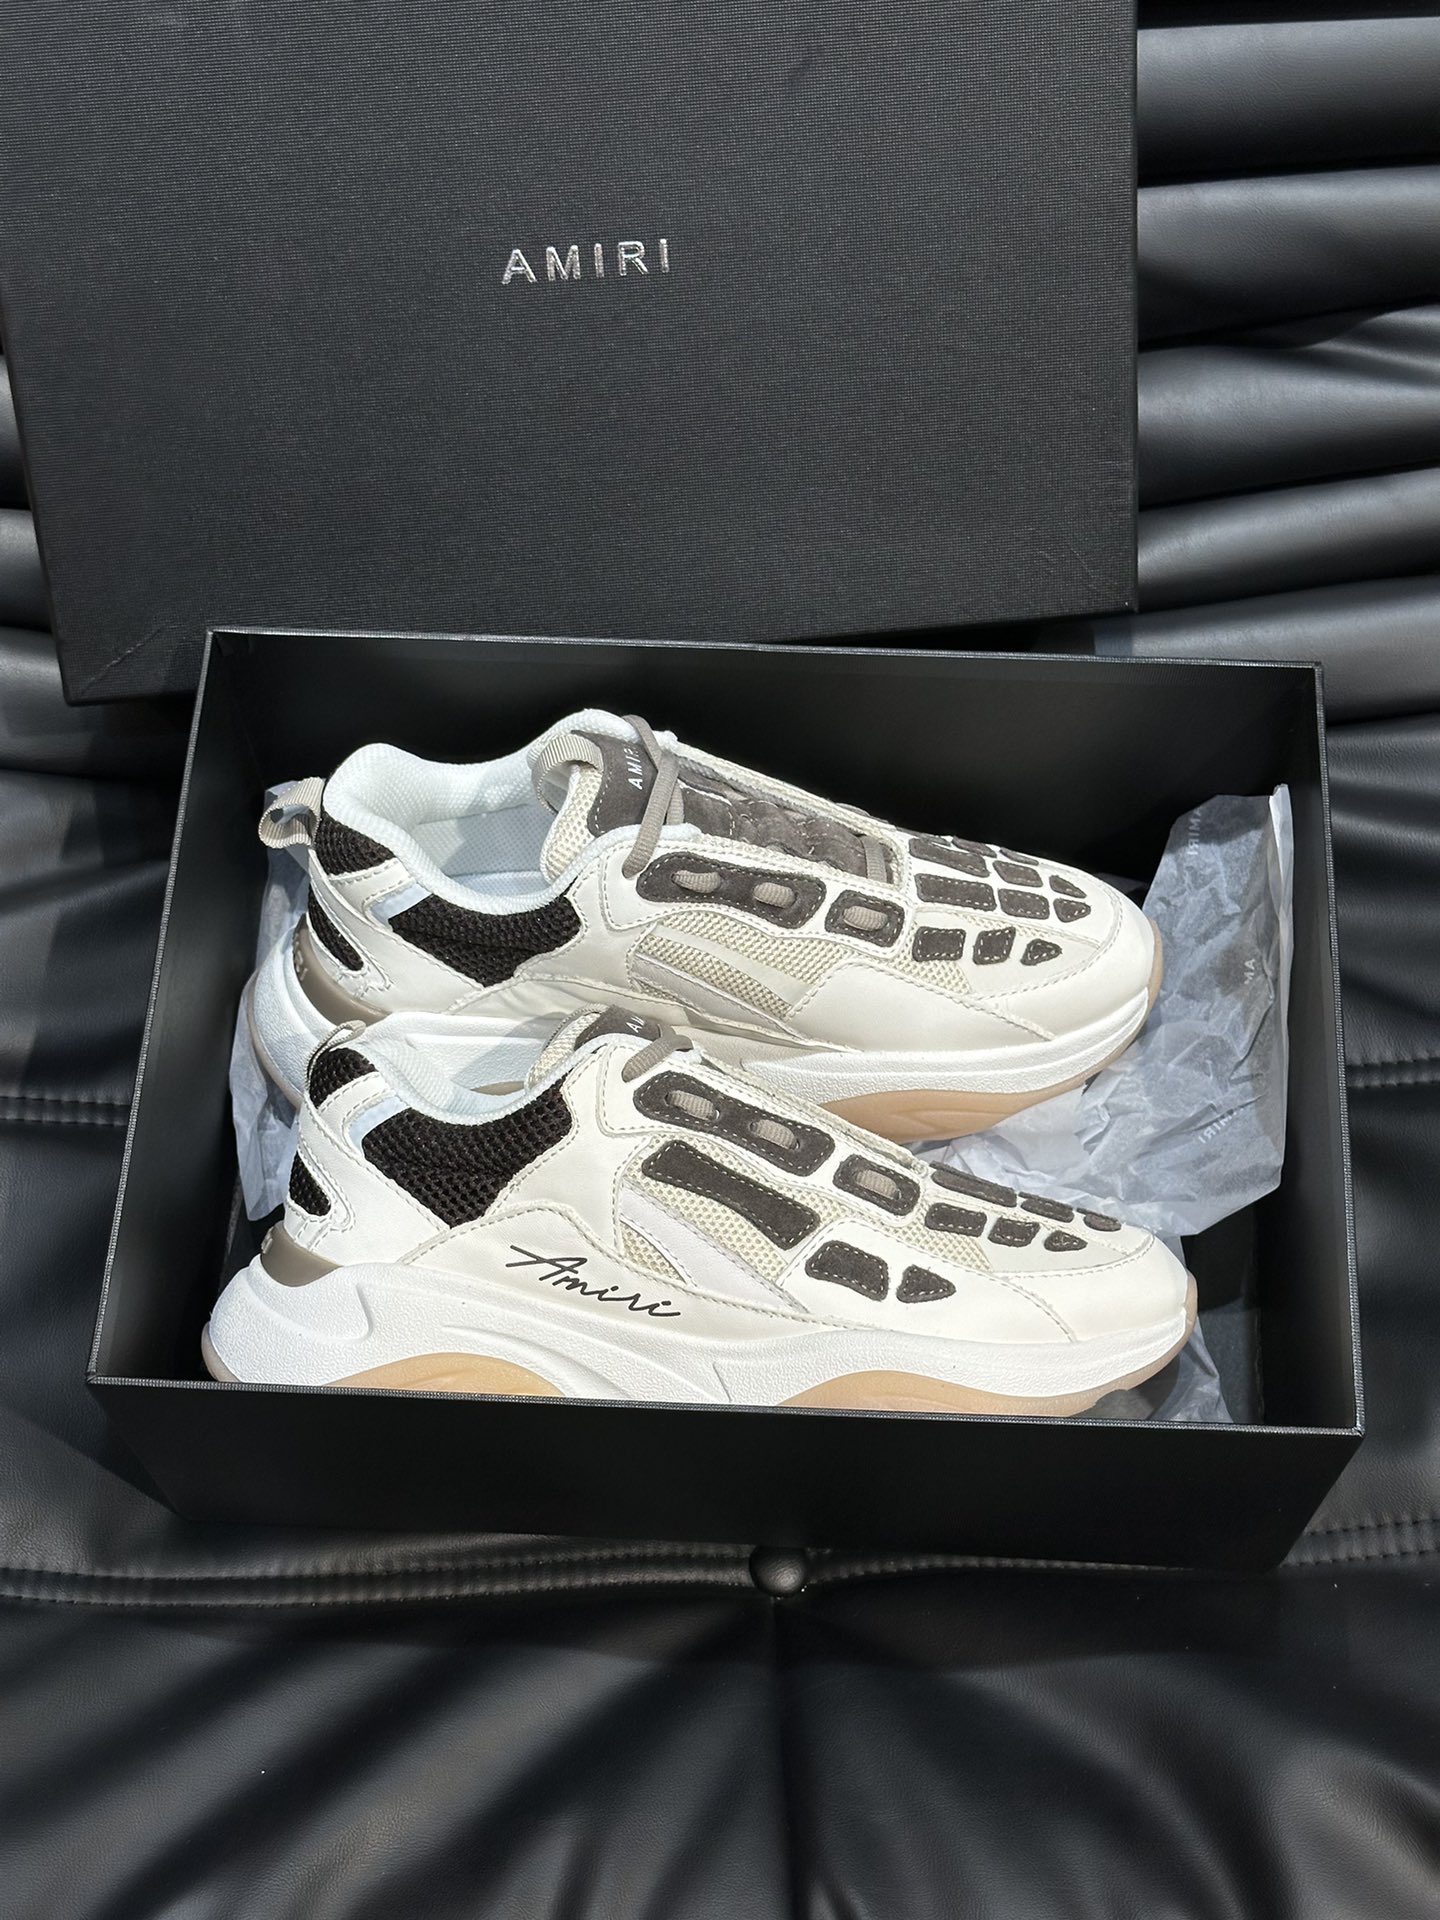 AMIRI骨骼鞋最新运动鞋原版开发采用麂皮以及牛皮加上高密度网布原TPU鞋底开模鞋面上的骨骼麂皮切割超级